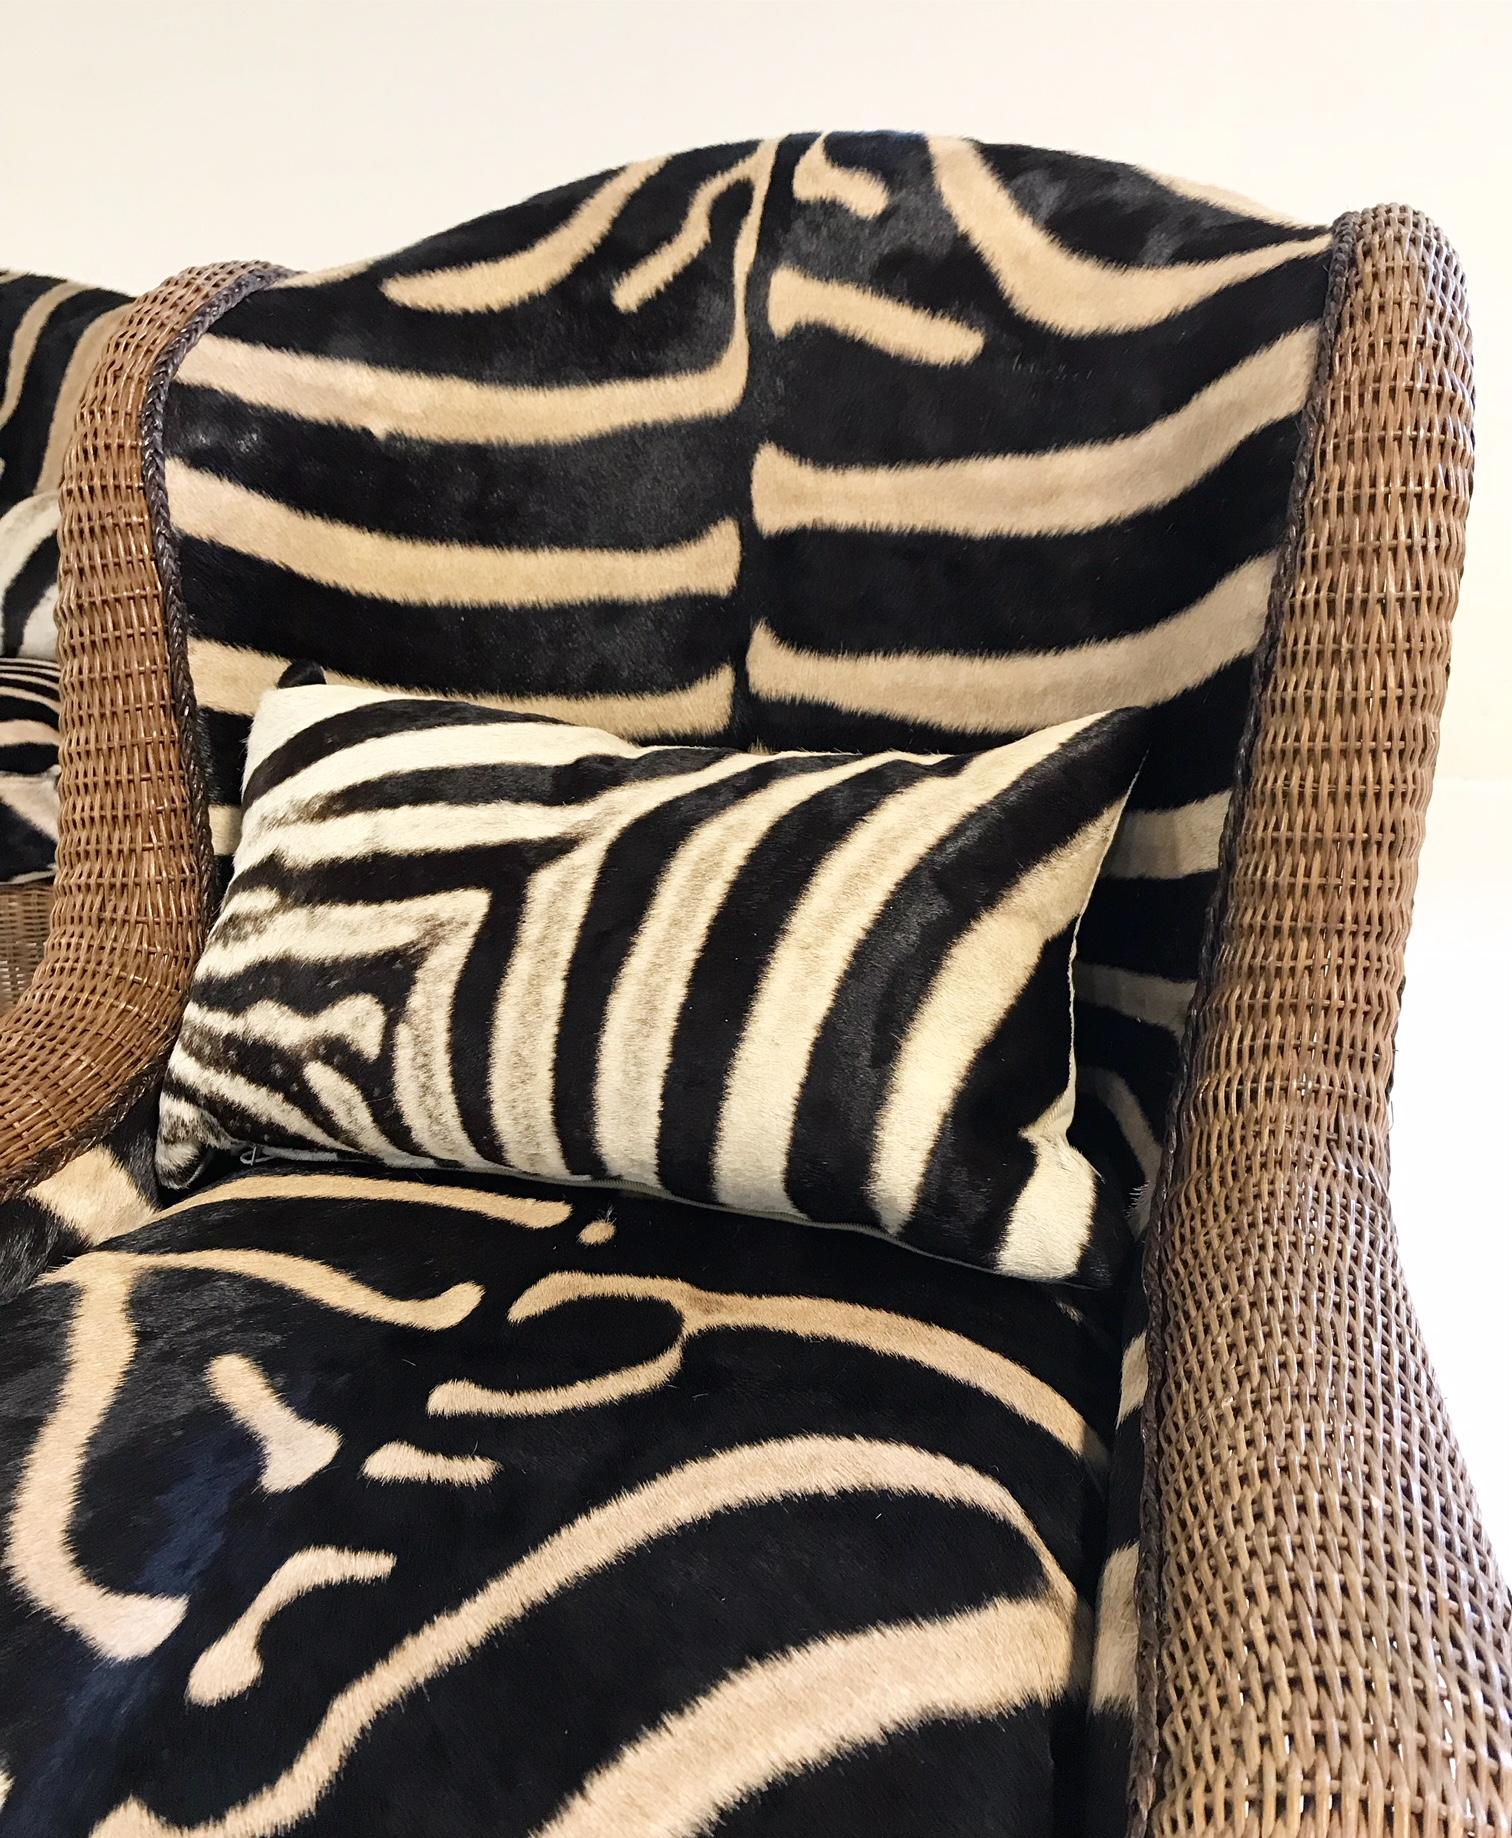 20th Century Vintage Ralph Lauren Wicker Wingback Chairs Restored in Zebra Hide, Pair